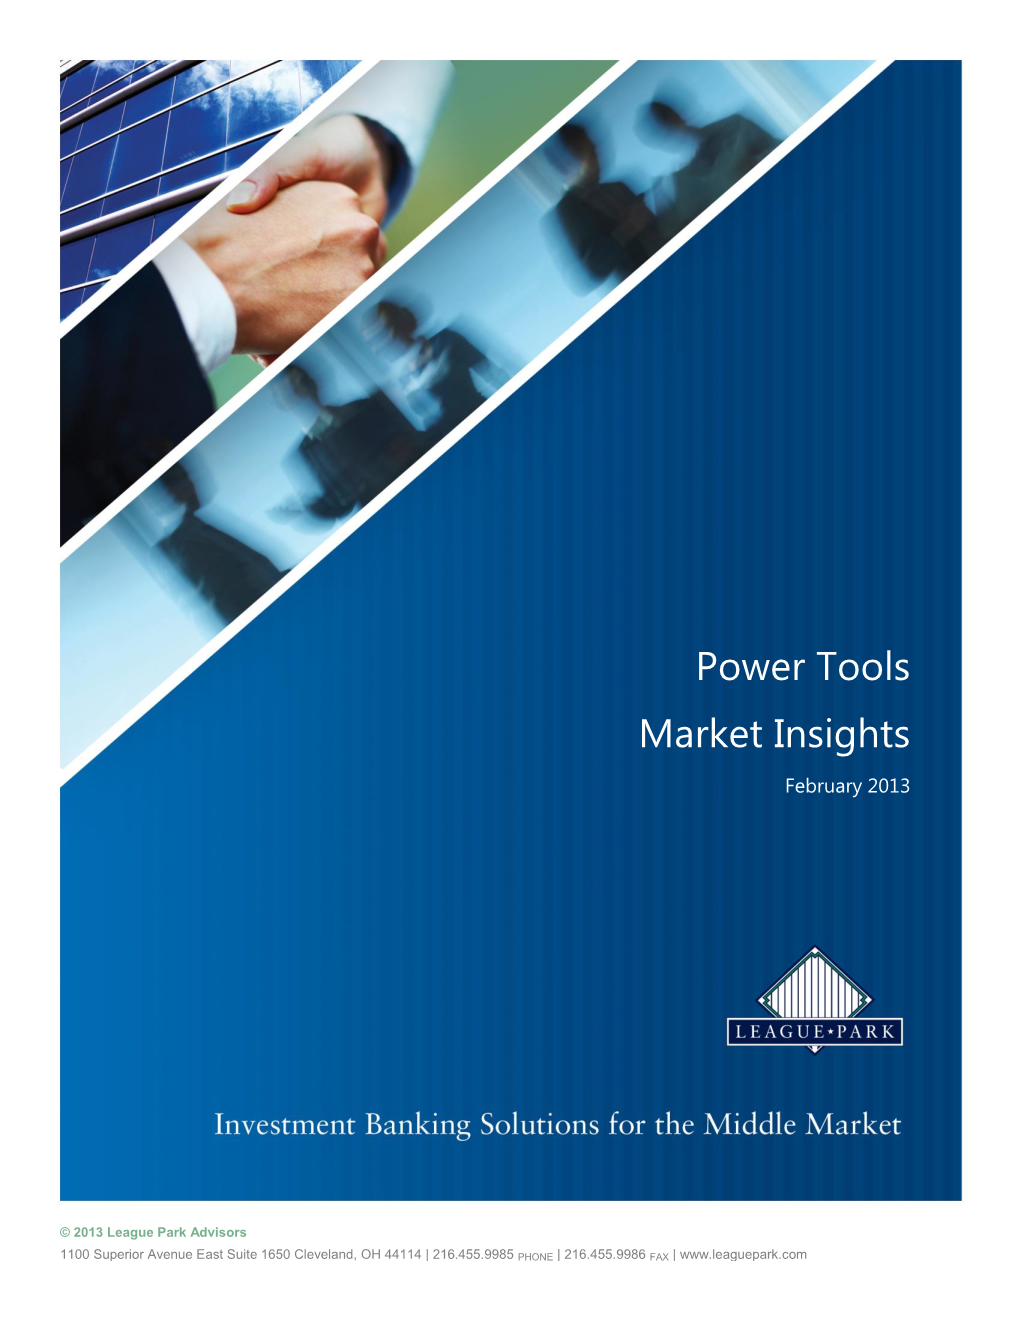 Power Tools Market Insights